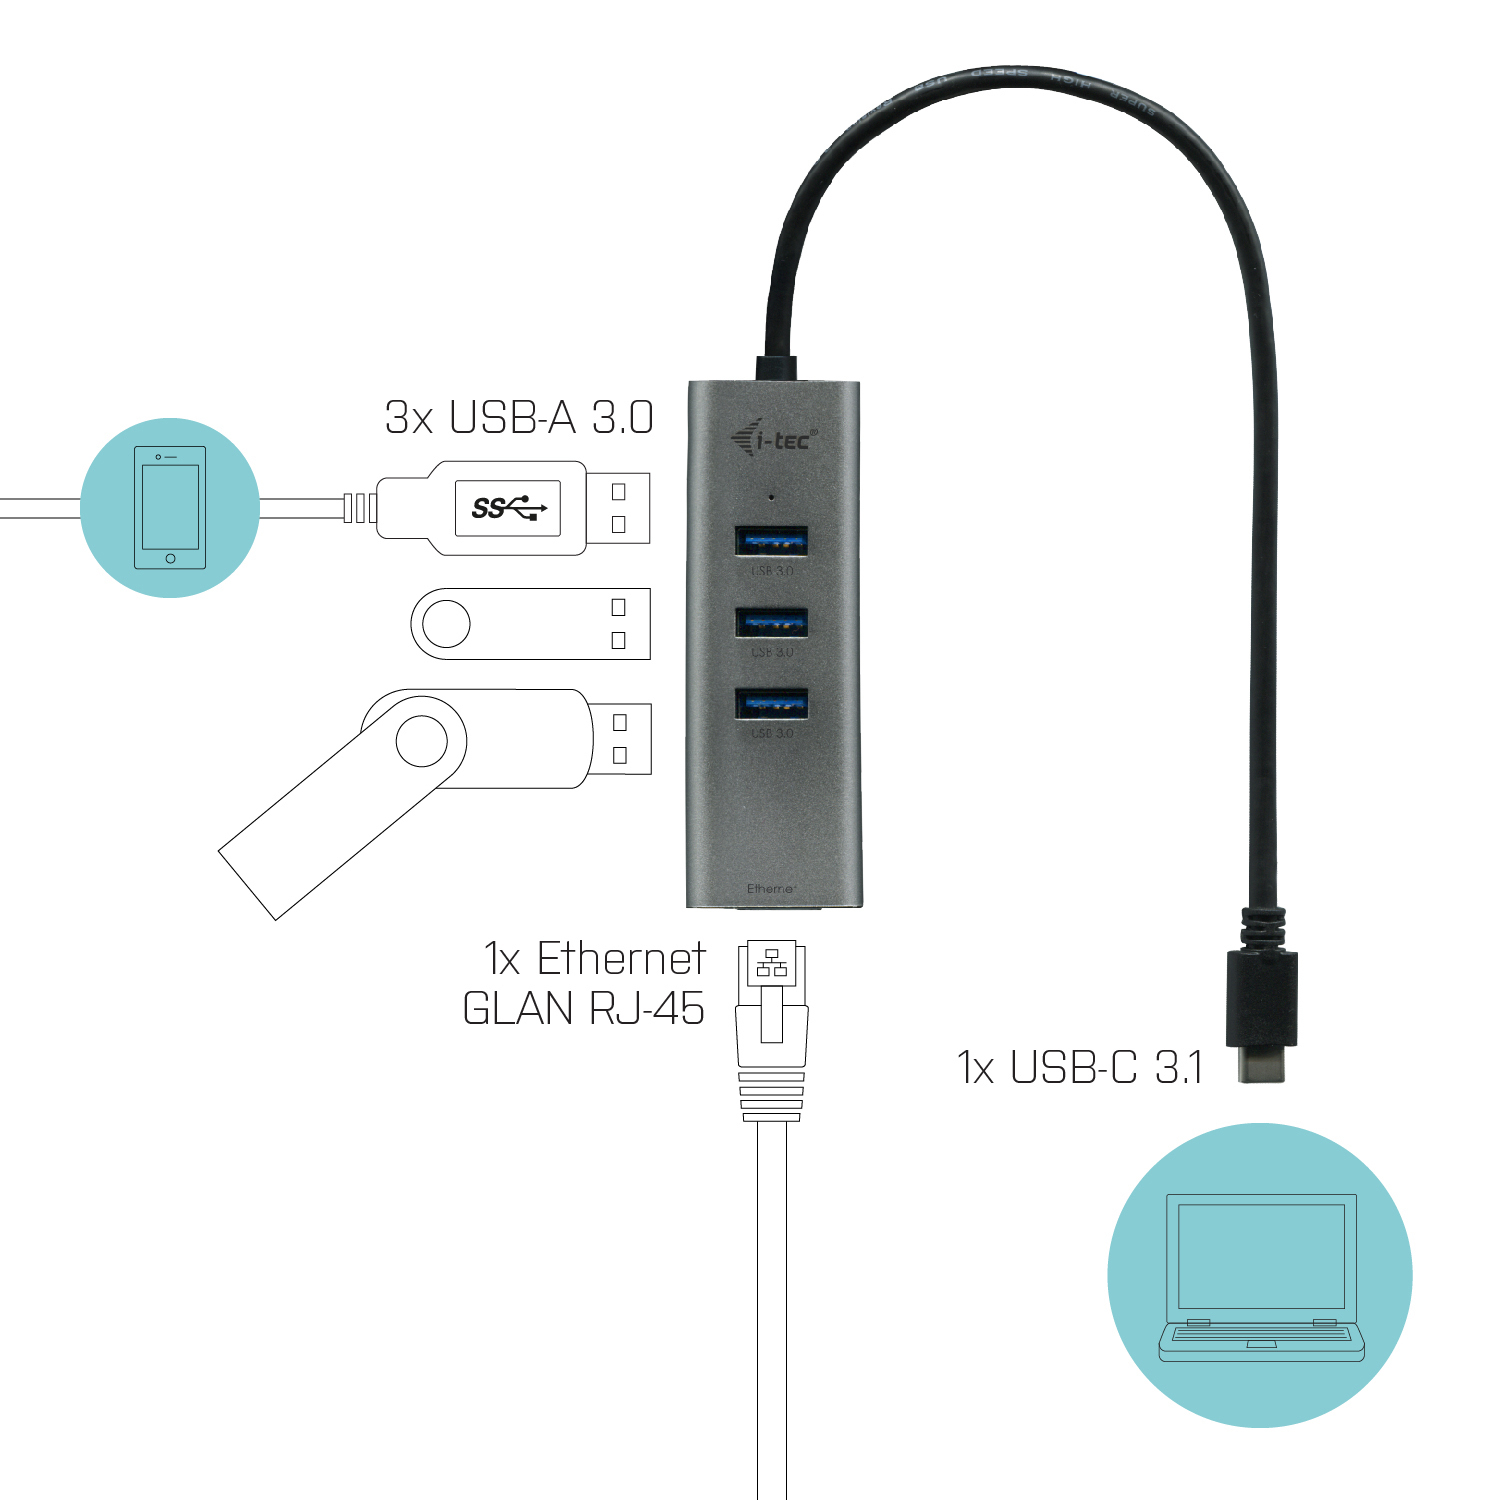 I-TEC USB-C Metal 3-Port HUB with Gigabit Ethernet Adapter 1x USB-C to RJ-45 3x USB 3.0 Port LED-Anzeige compatible with TB 3